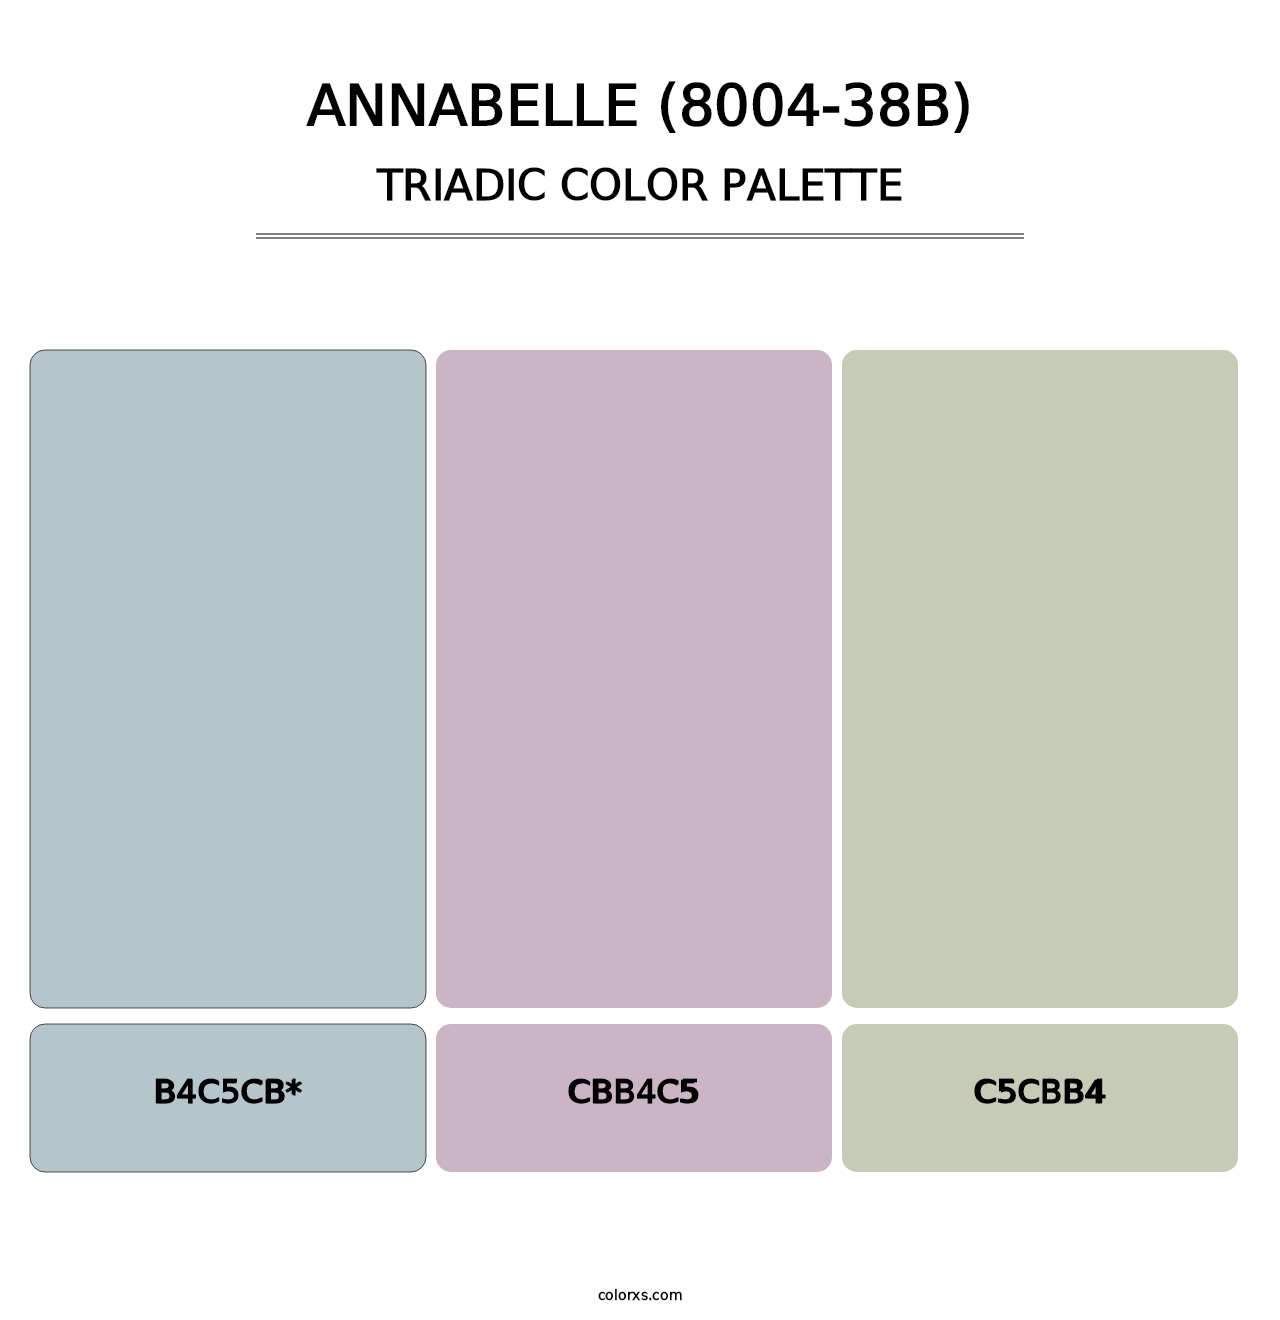 Annabelle (8004-38B) - Triadic Color Palette